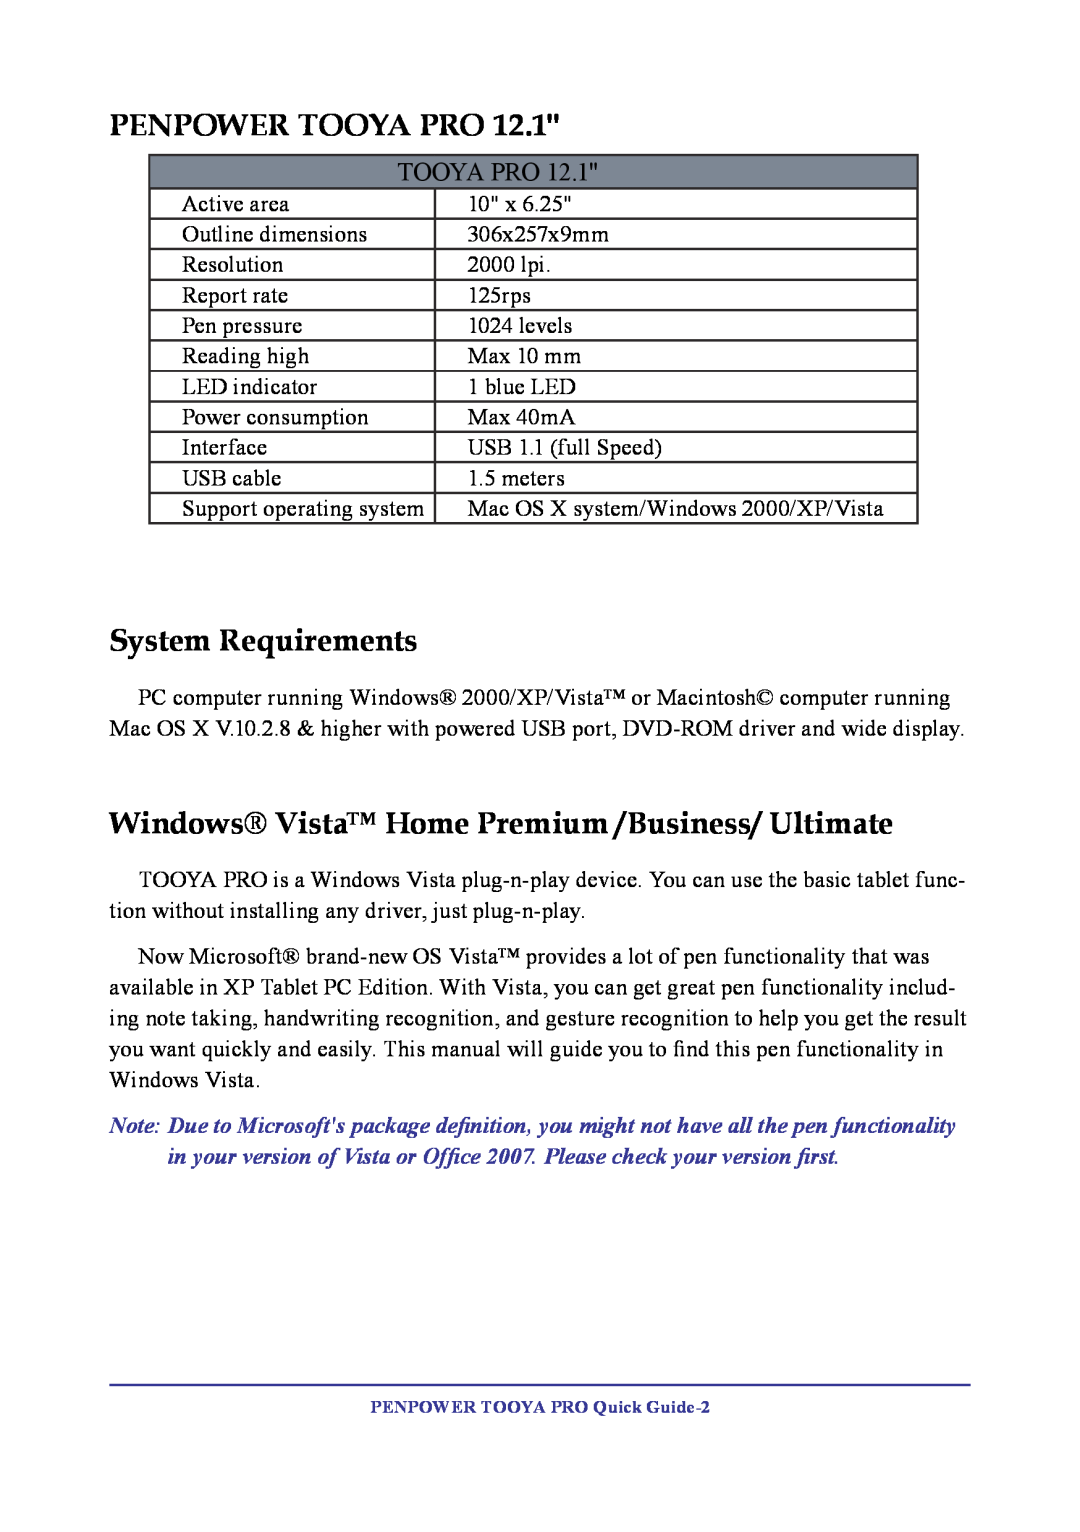 Penpower TOOYA PRO manual Penpower Tooya Pro, System Requirements, Windows Vista Home Premium /Business/ Ultimate 